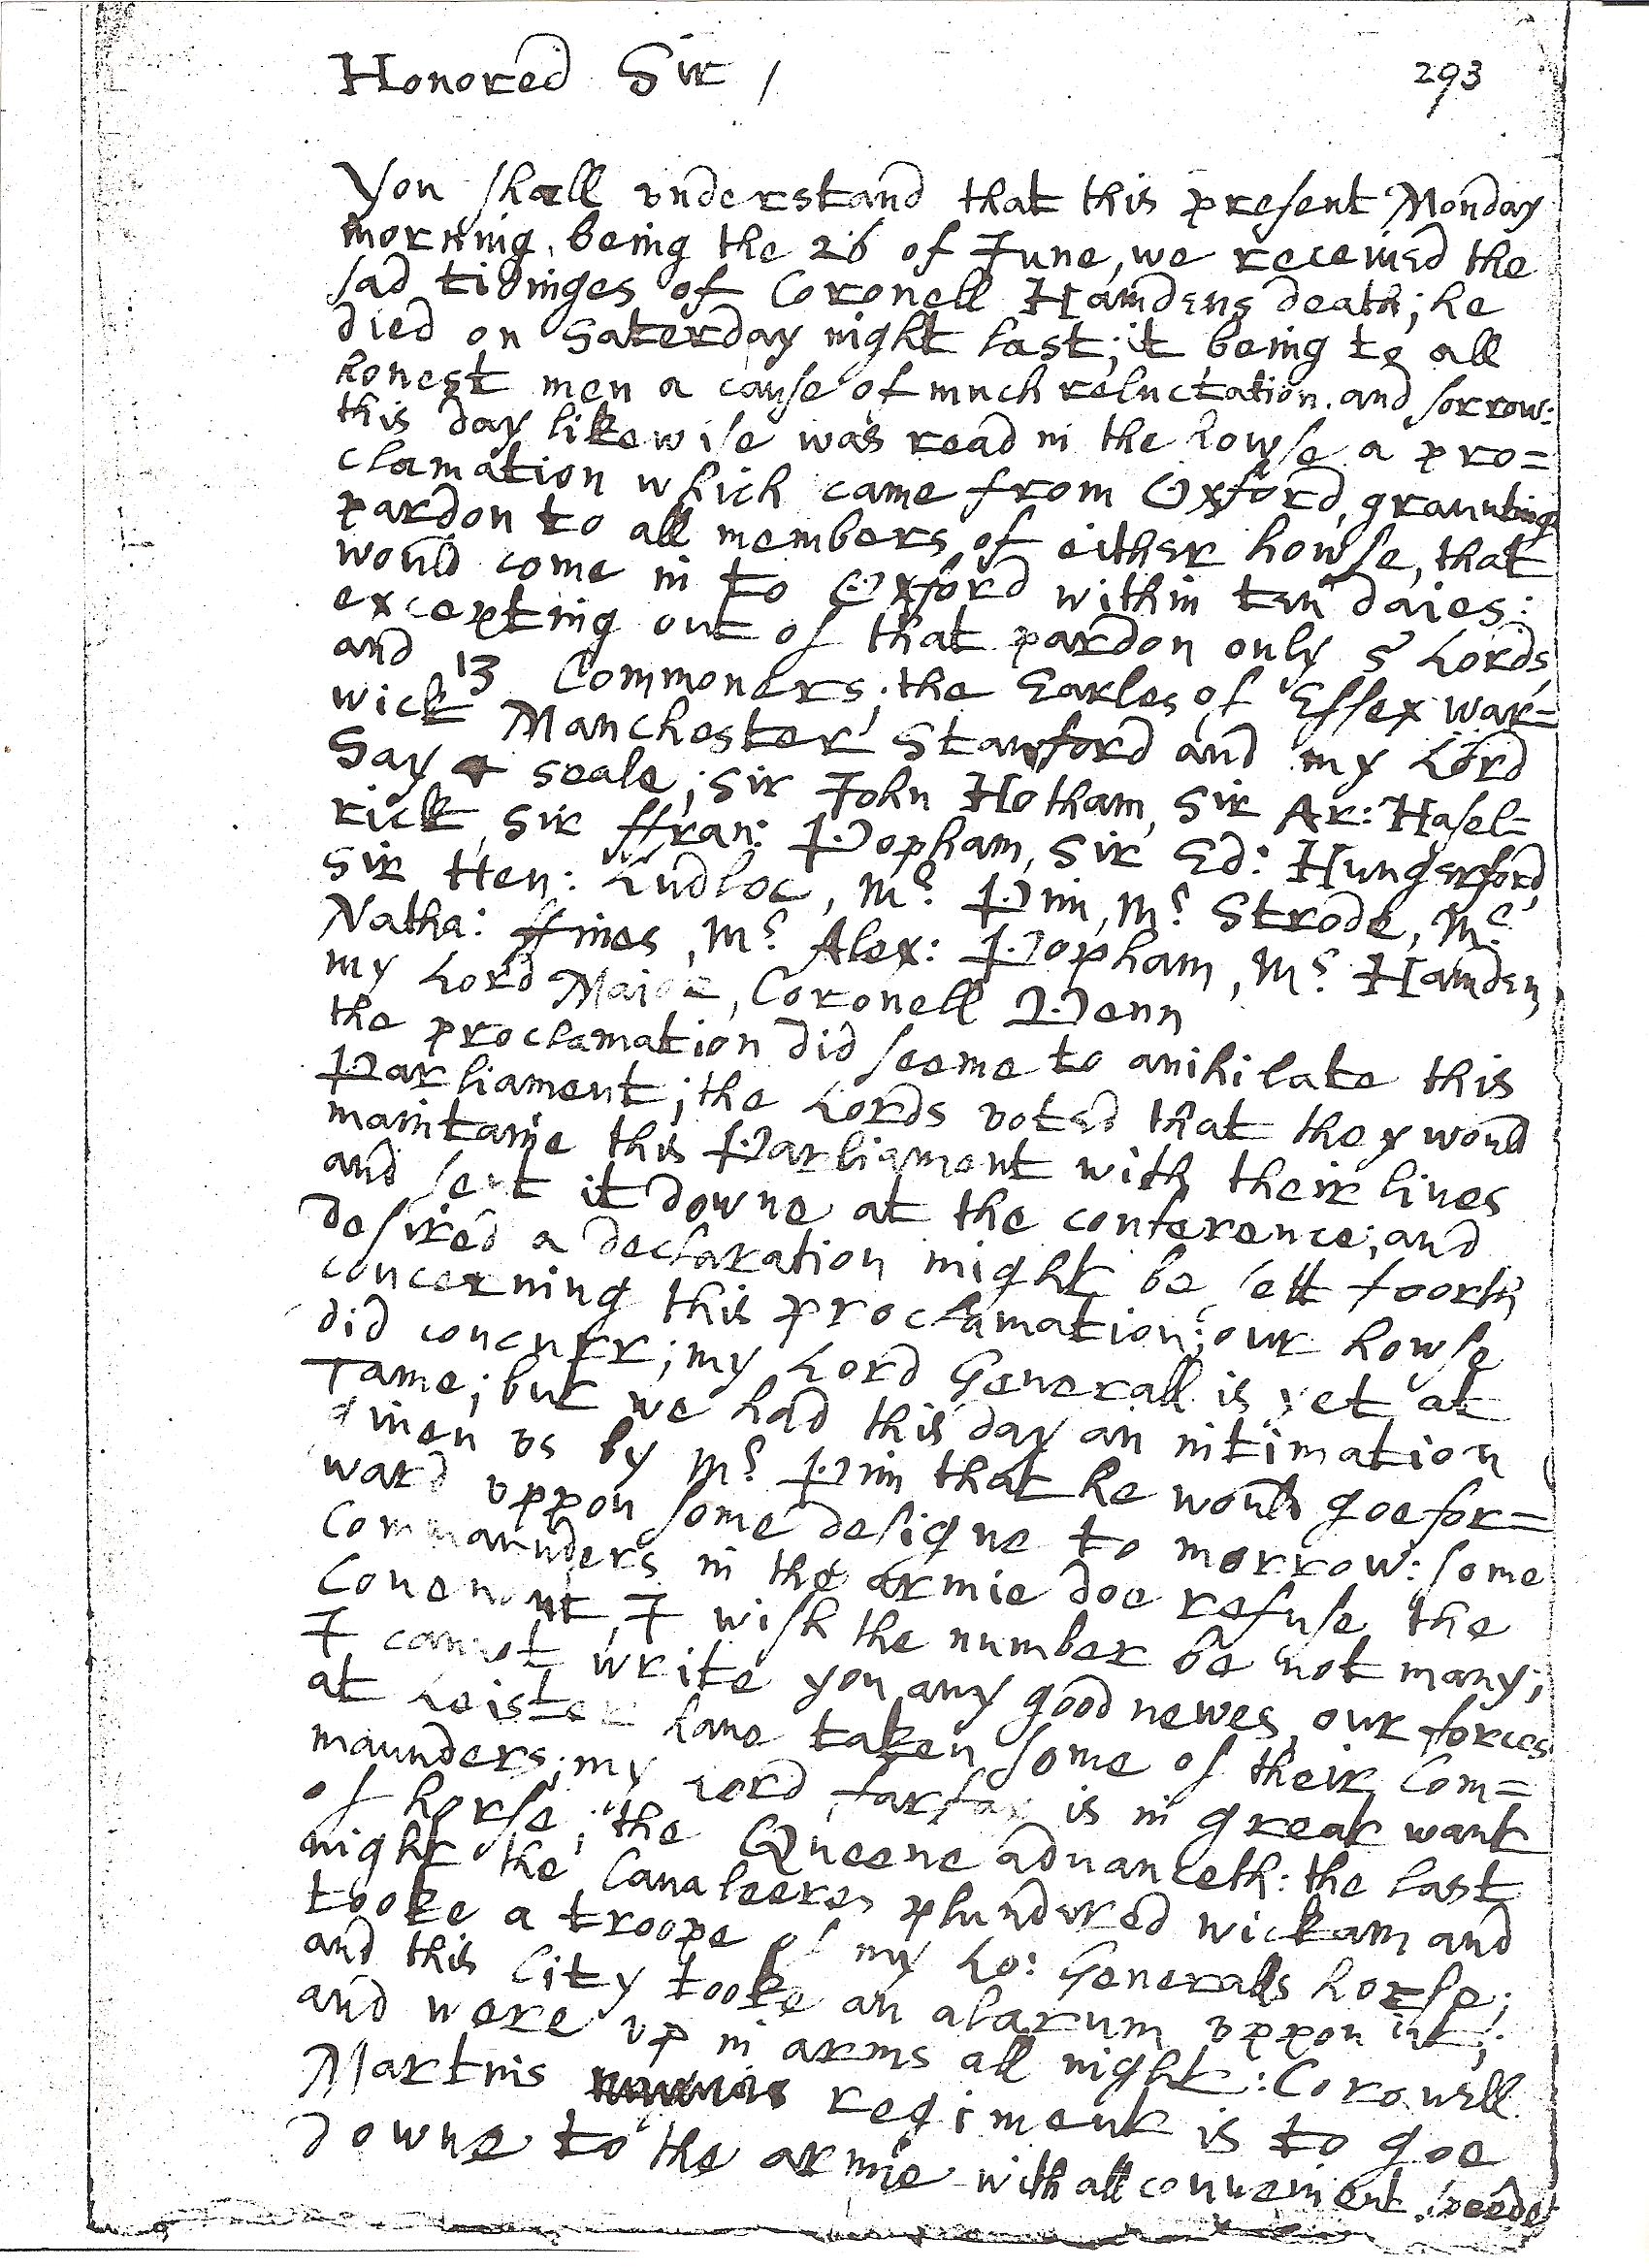 Goodwin's Letter